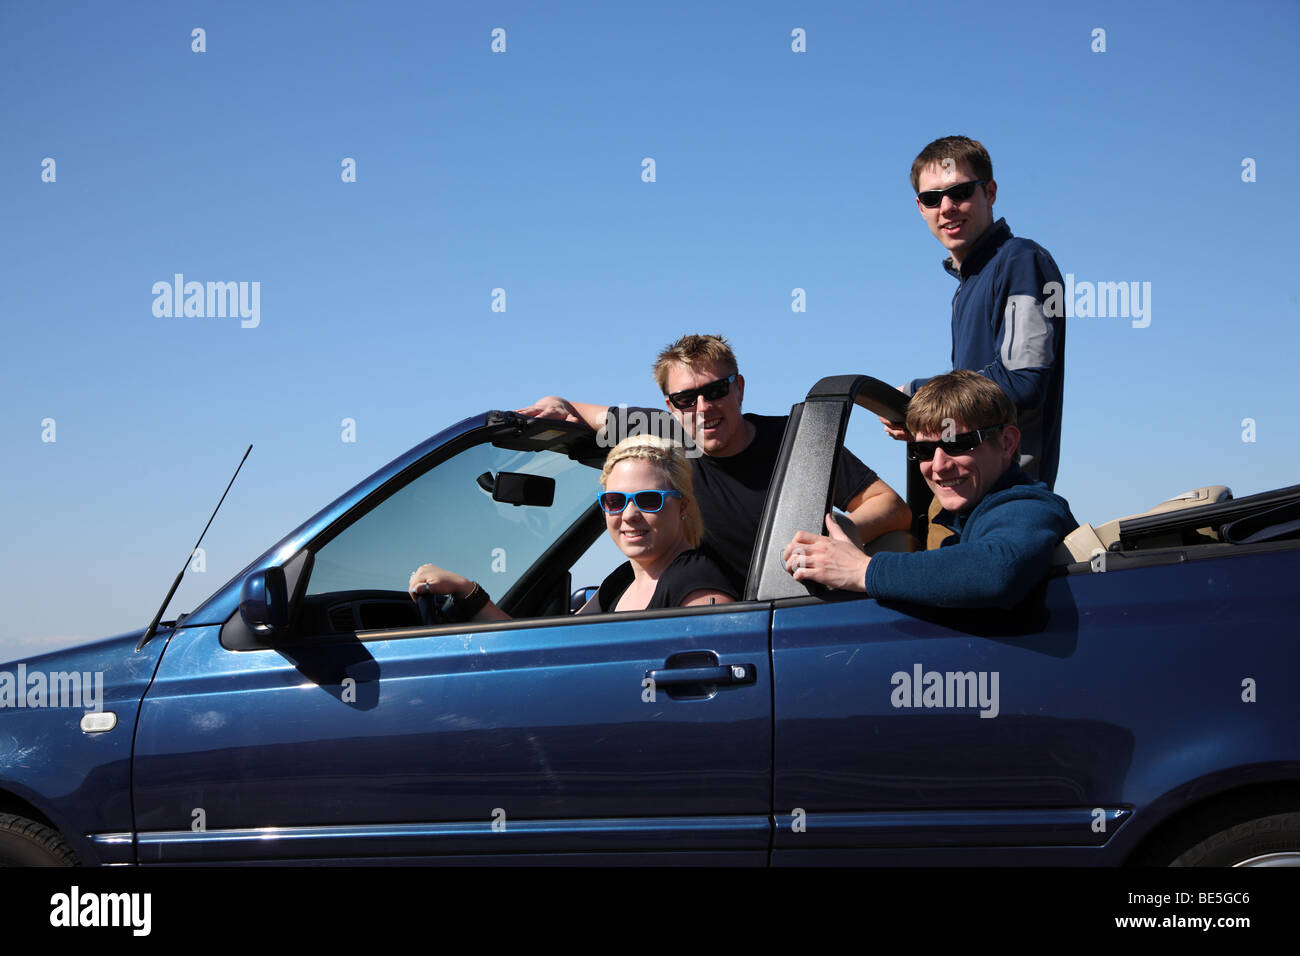 Grupo de gente joven en coche convertible Foto de stock